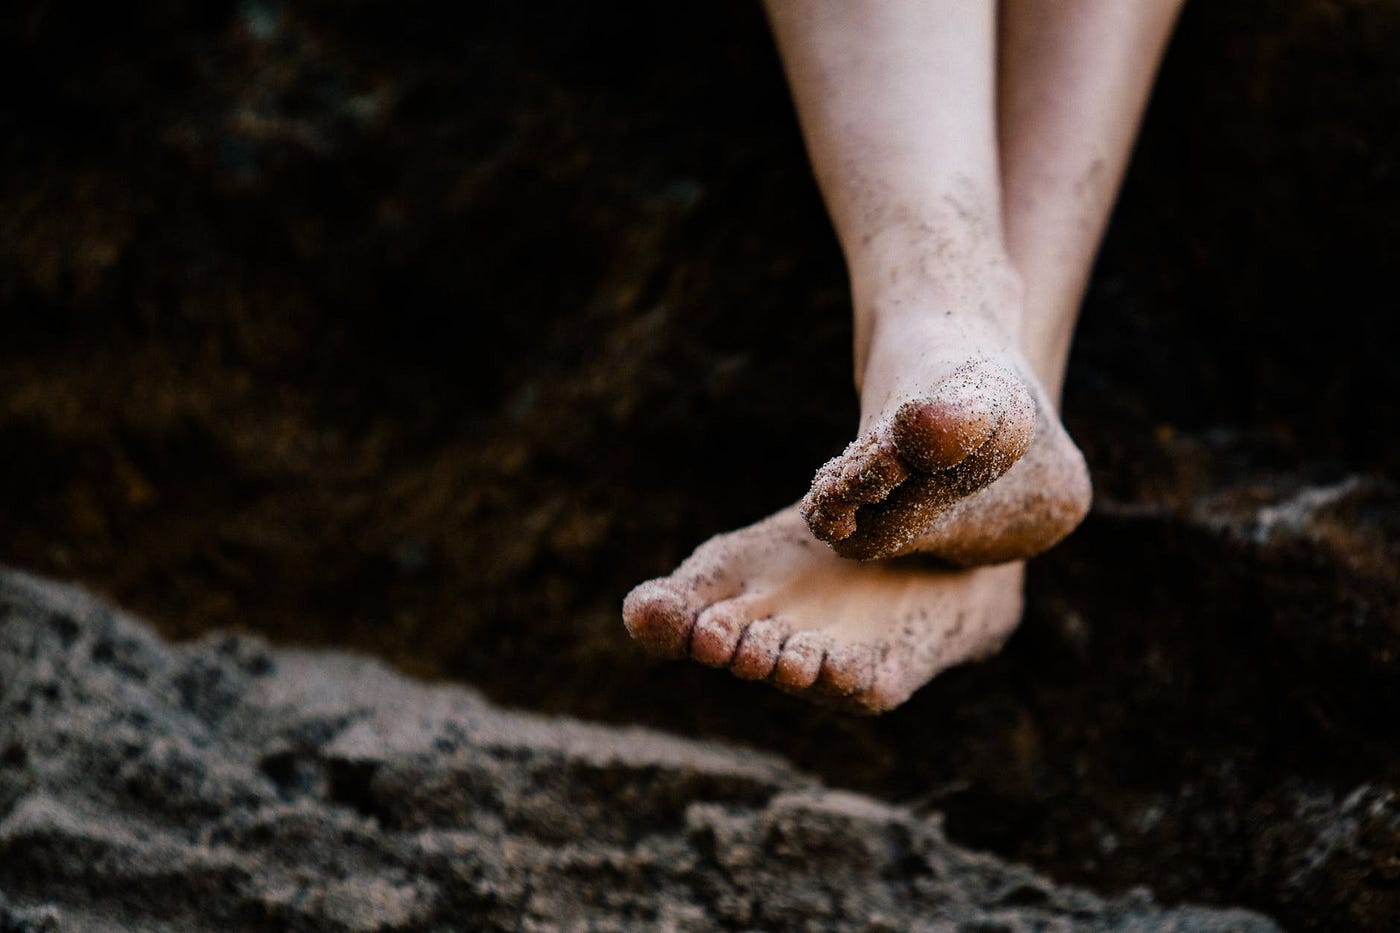 ReX] Les chaussures barefoot / minimalistes : une évidence. | by Meven Royo  | Medium